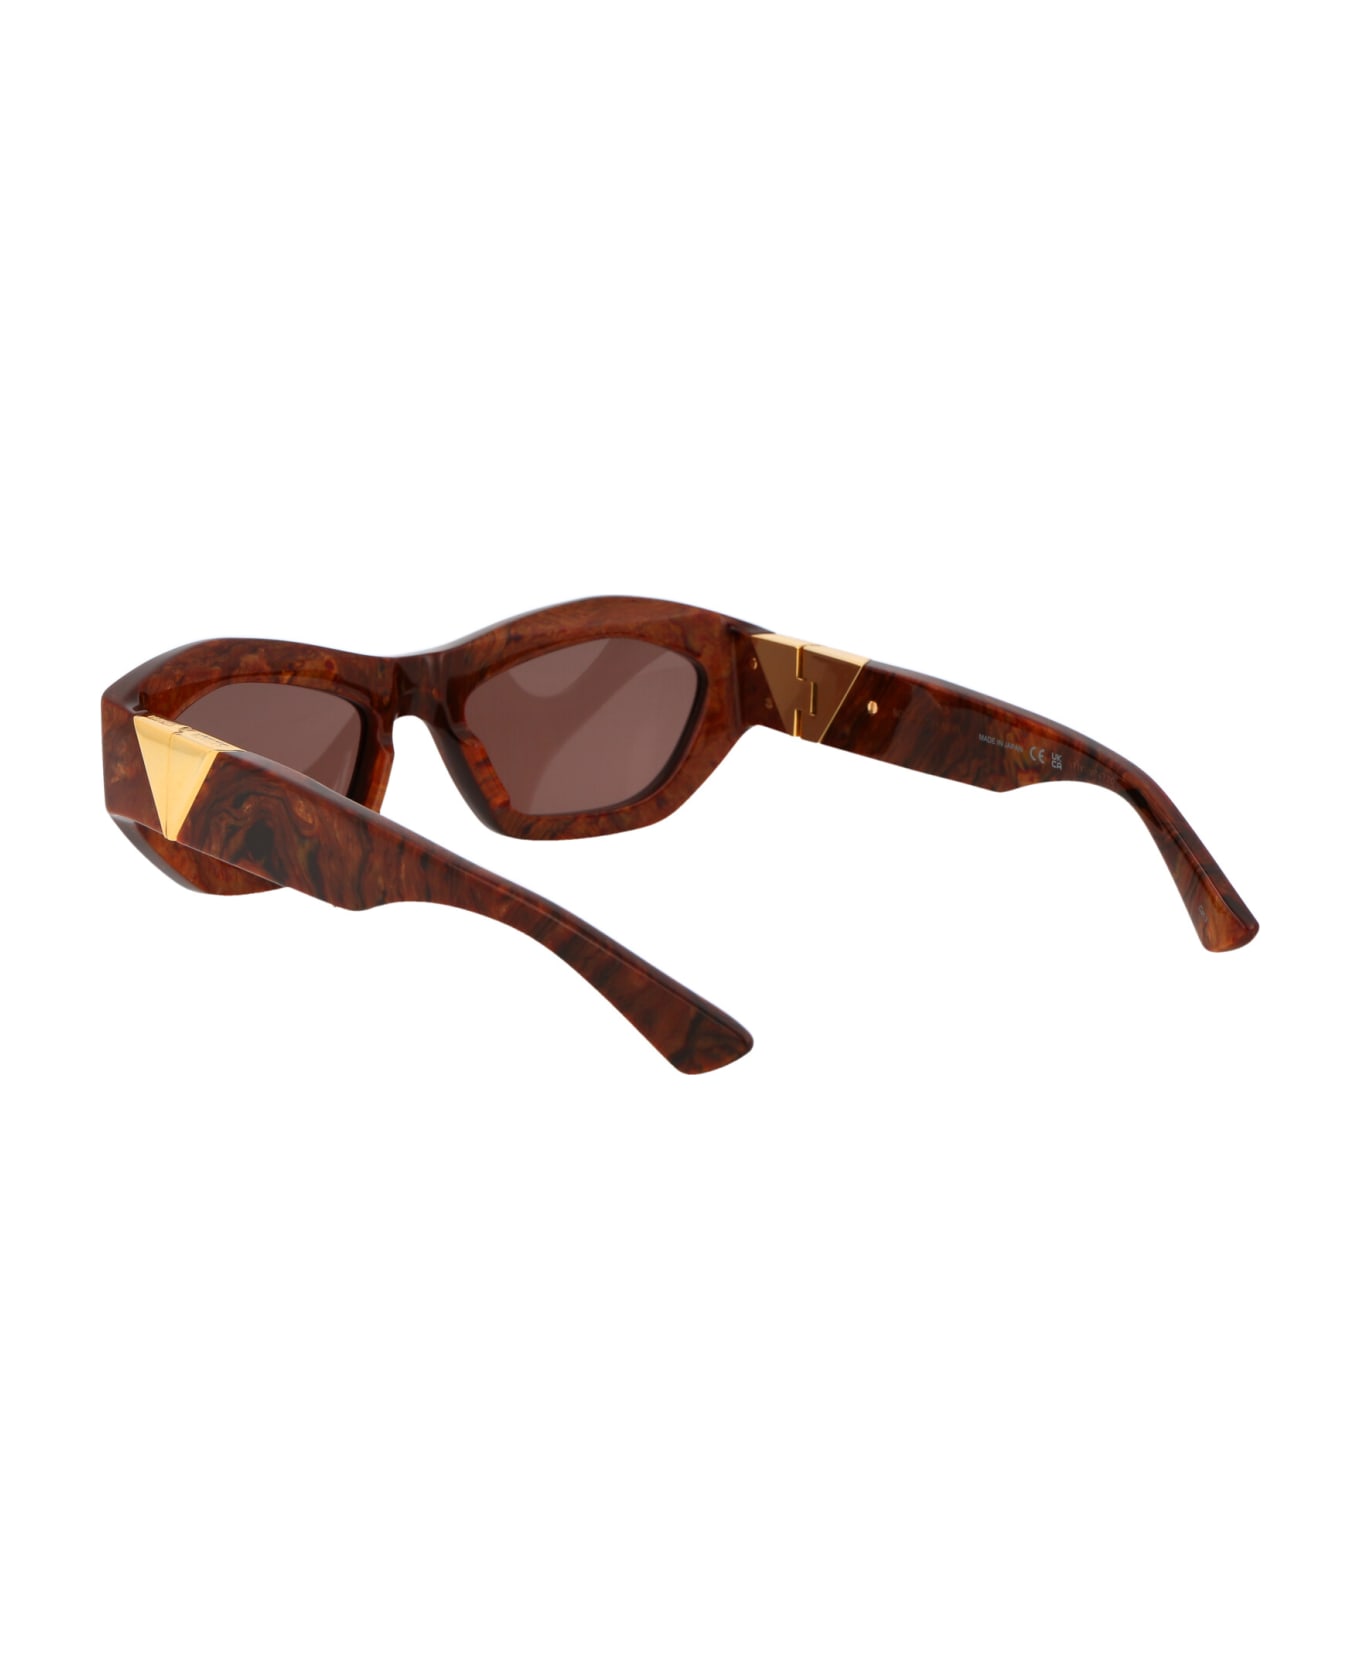 Bottega Veneta Eyewear Bv1221s Sunglasses - 005 BROWN BROWN BROWN